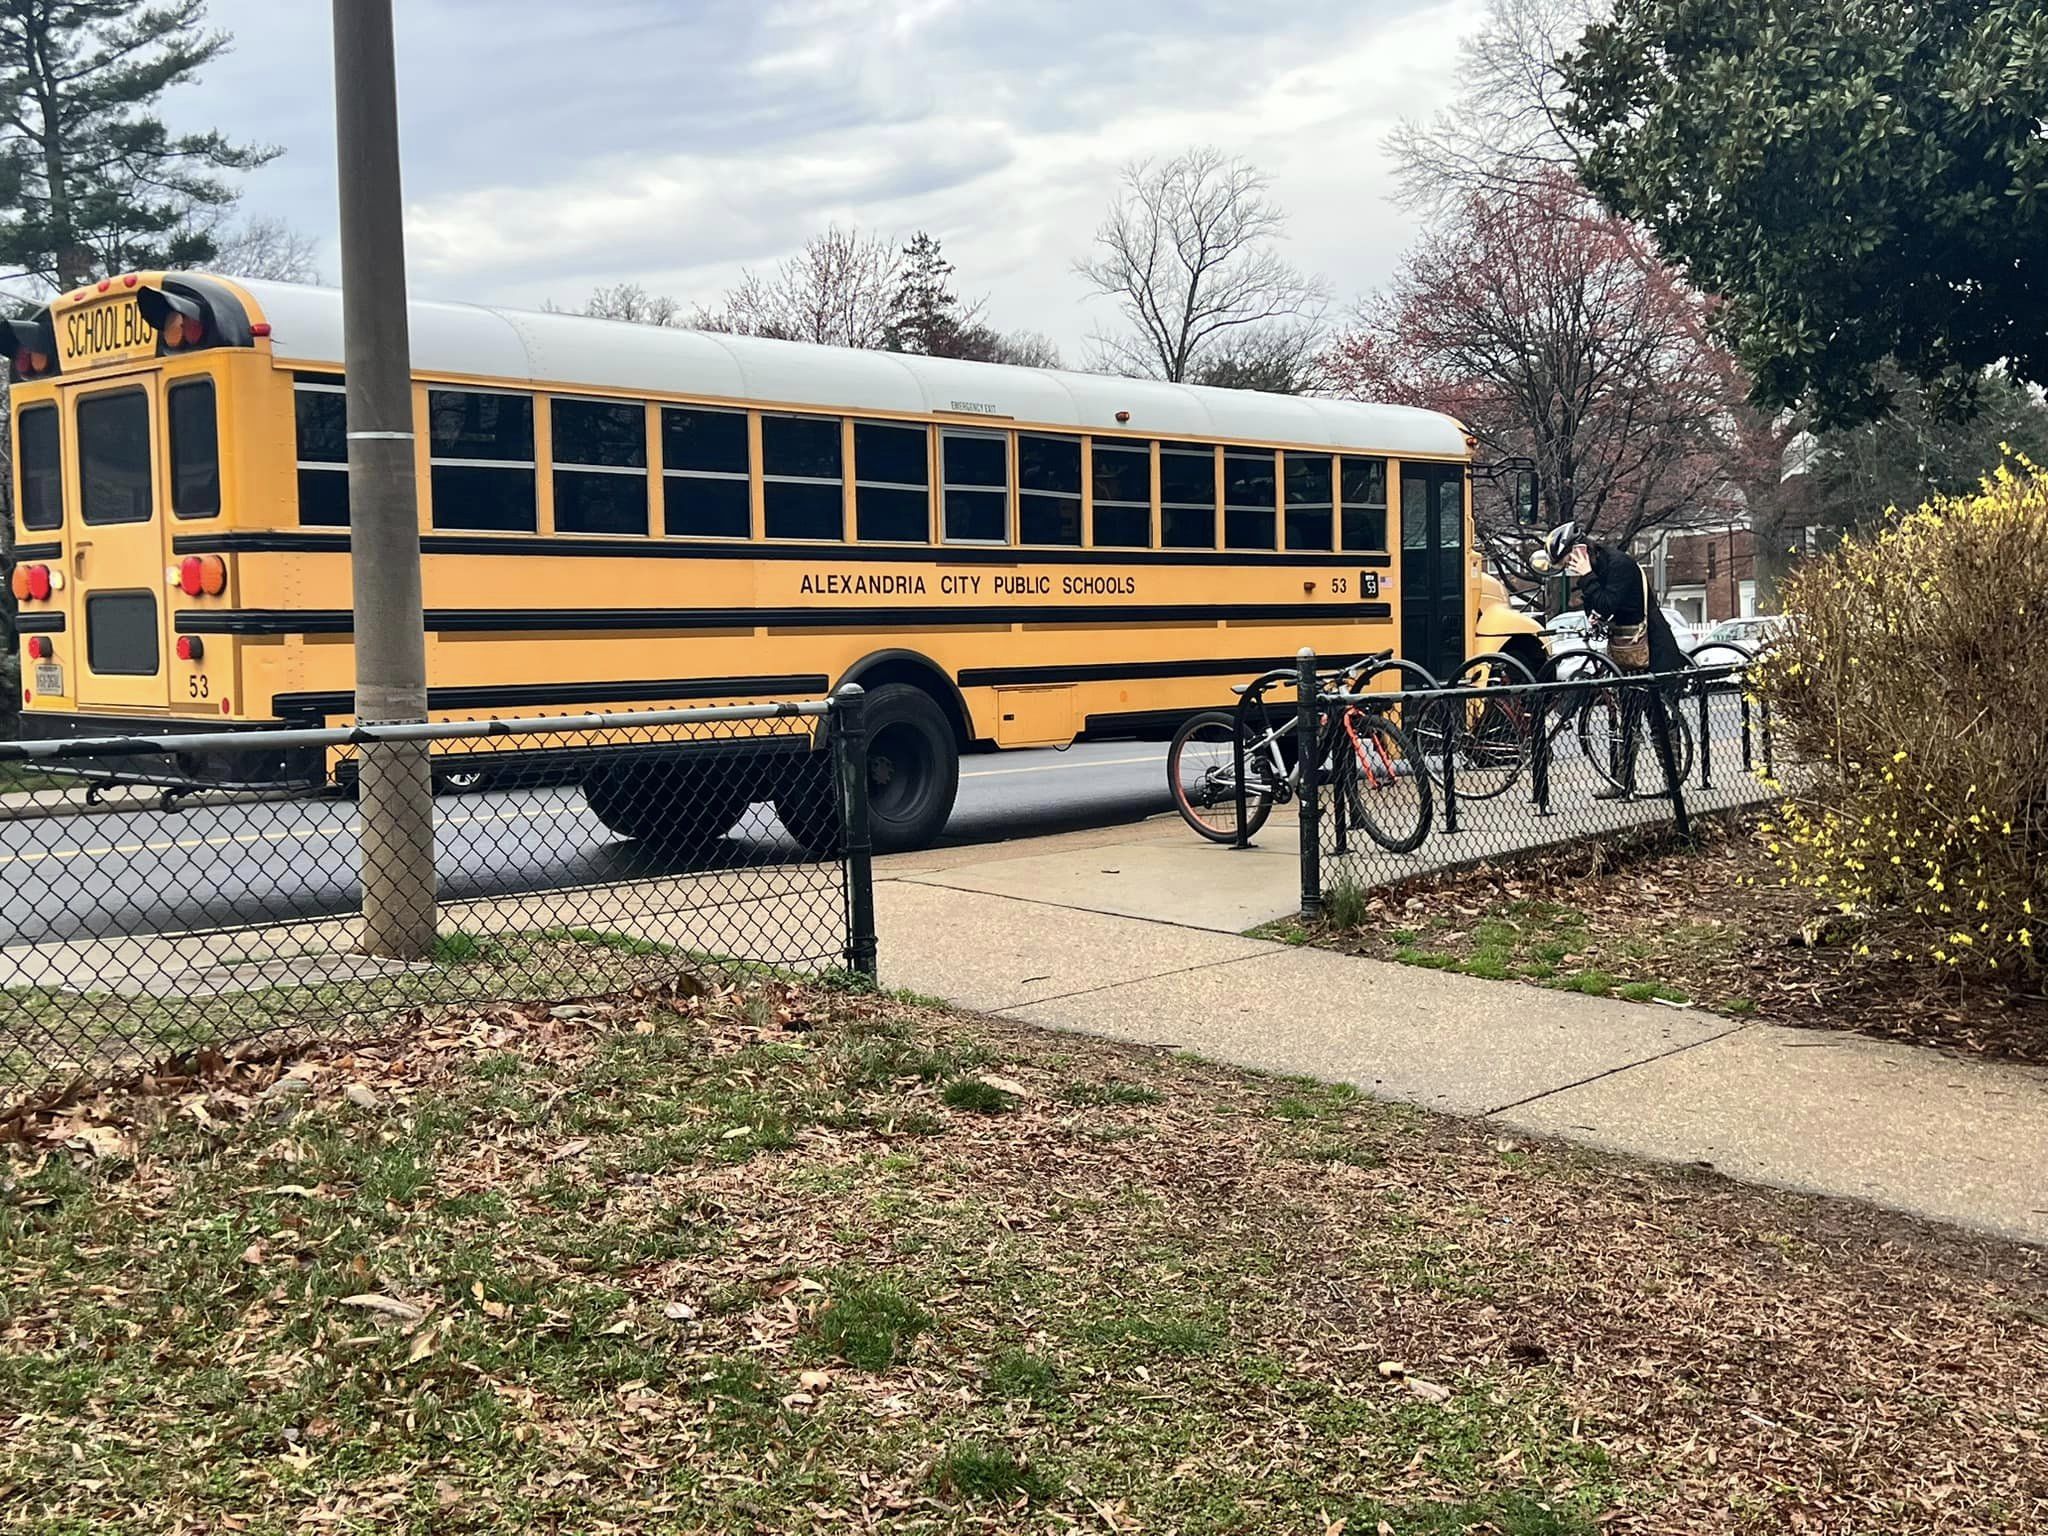 Threats lead to evacuation of Alexandria, VA elementary school